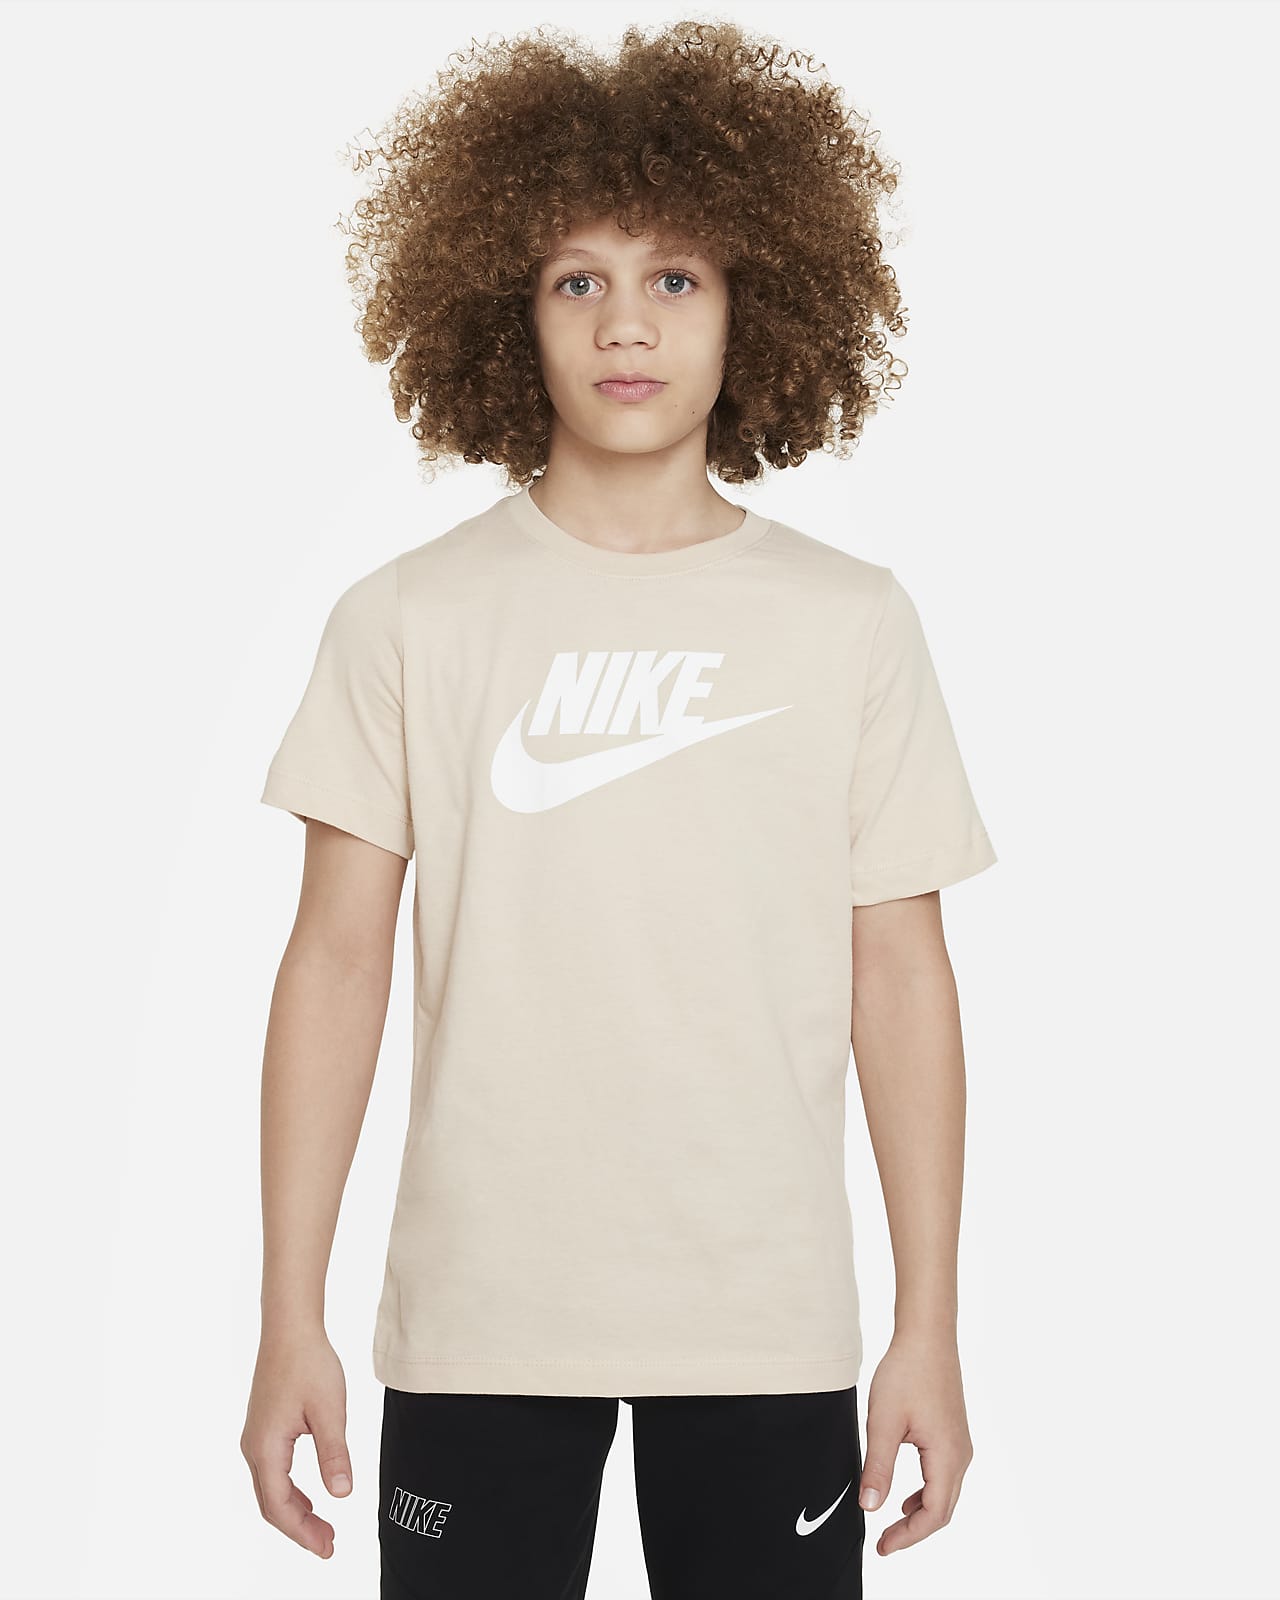 Nike Sportswear Older Kids' Cotton T-Shirt. Nike ZA